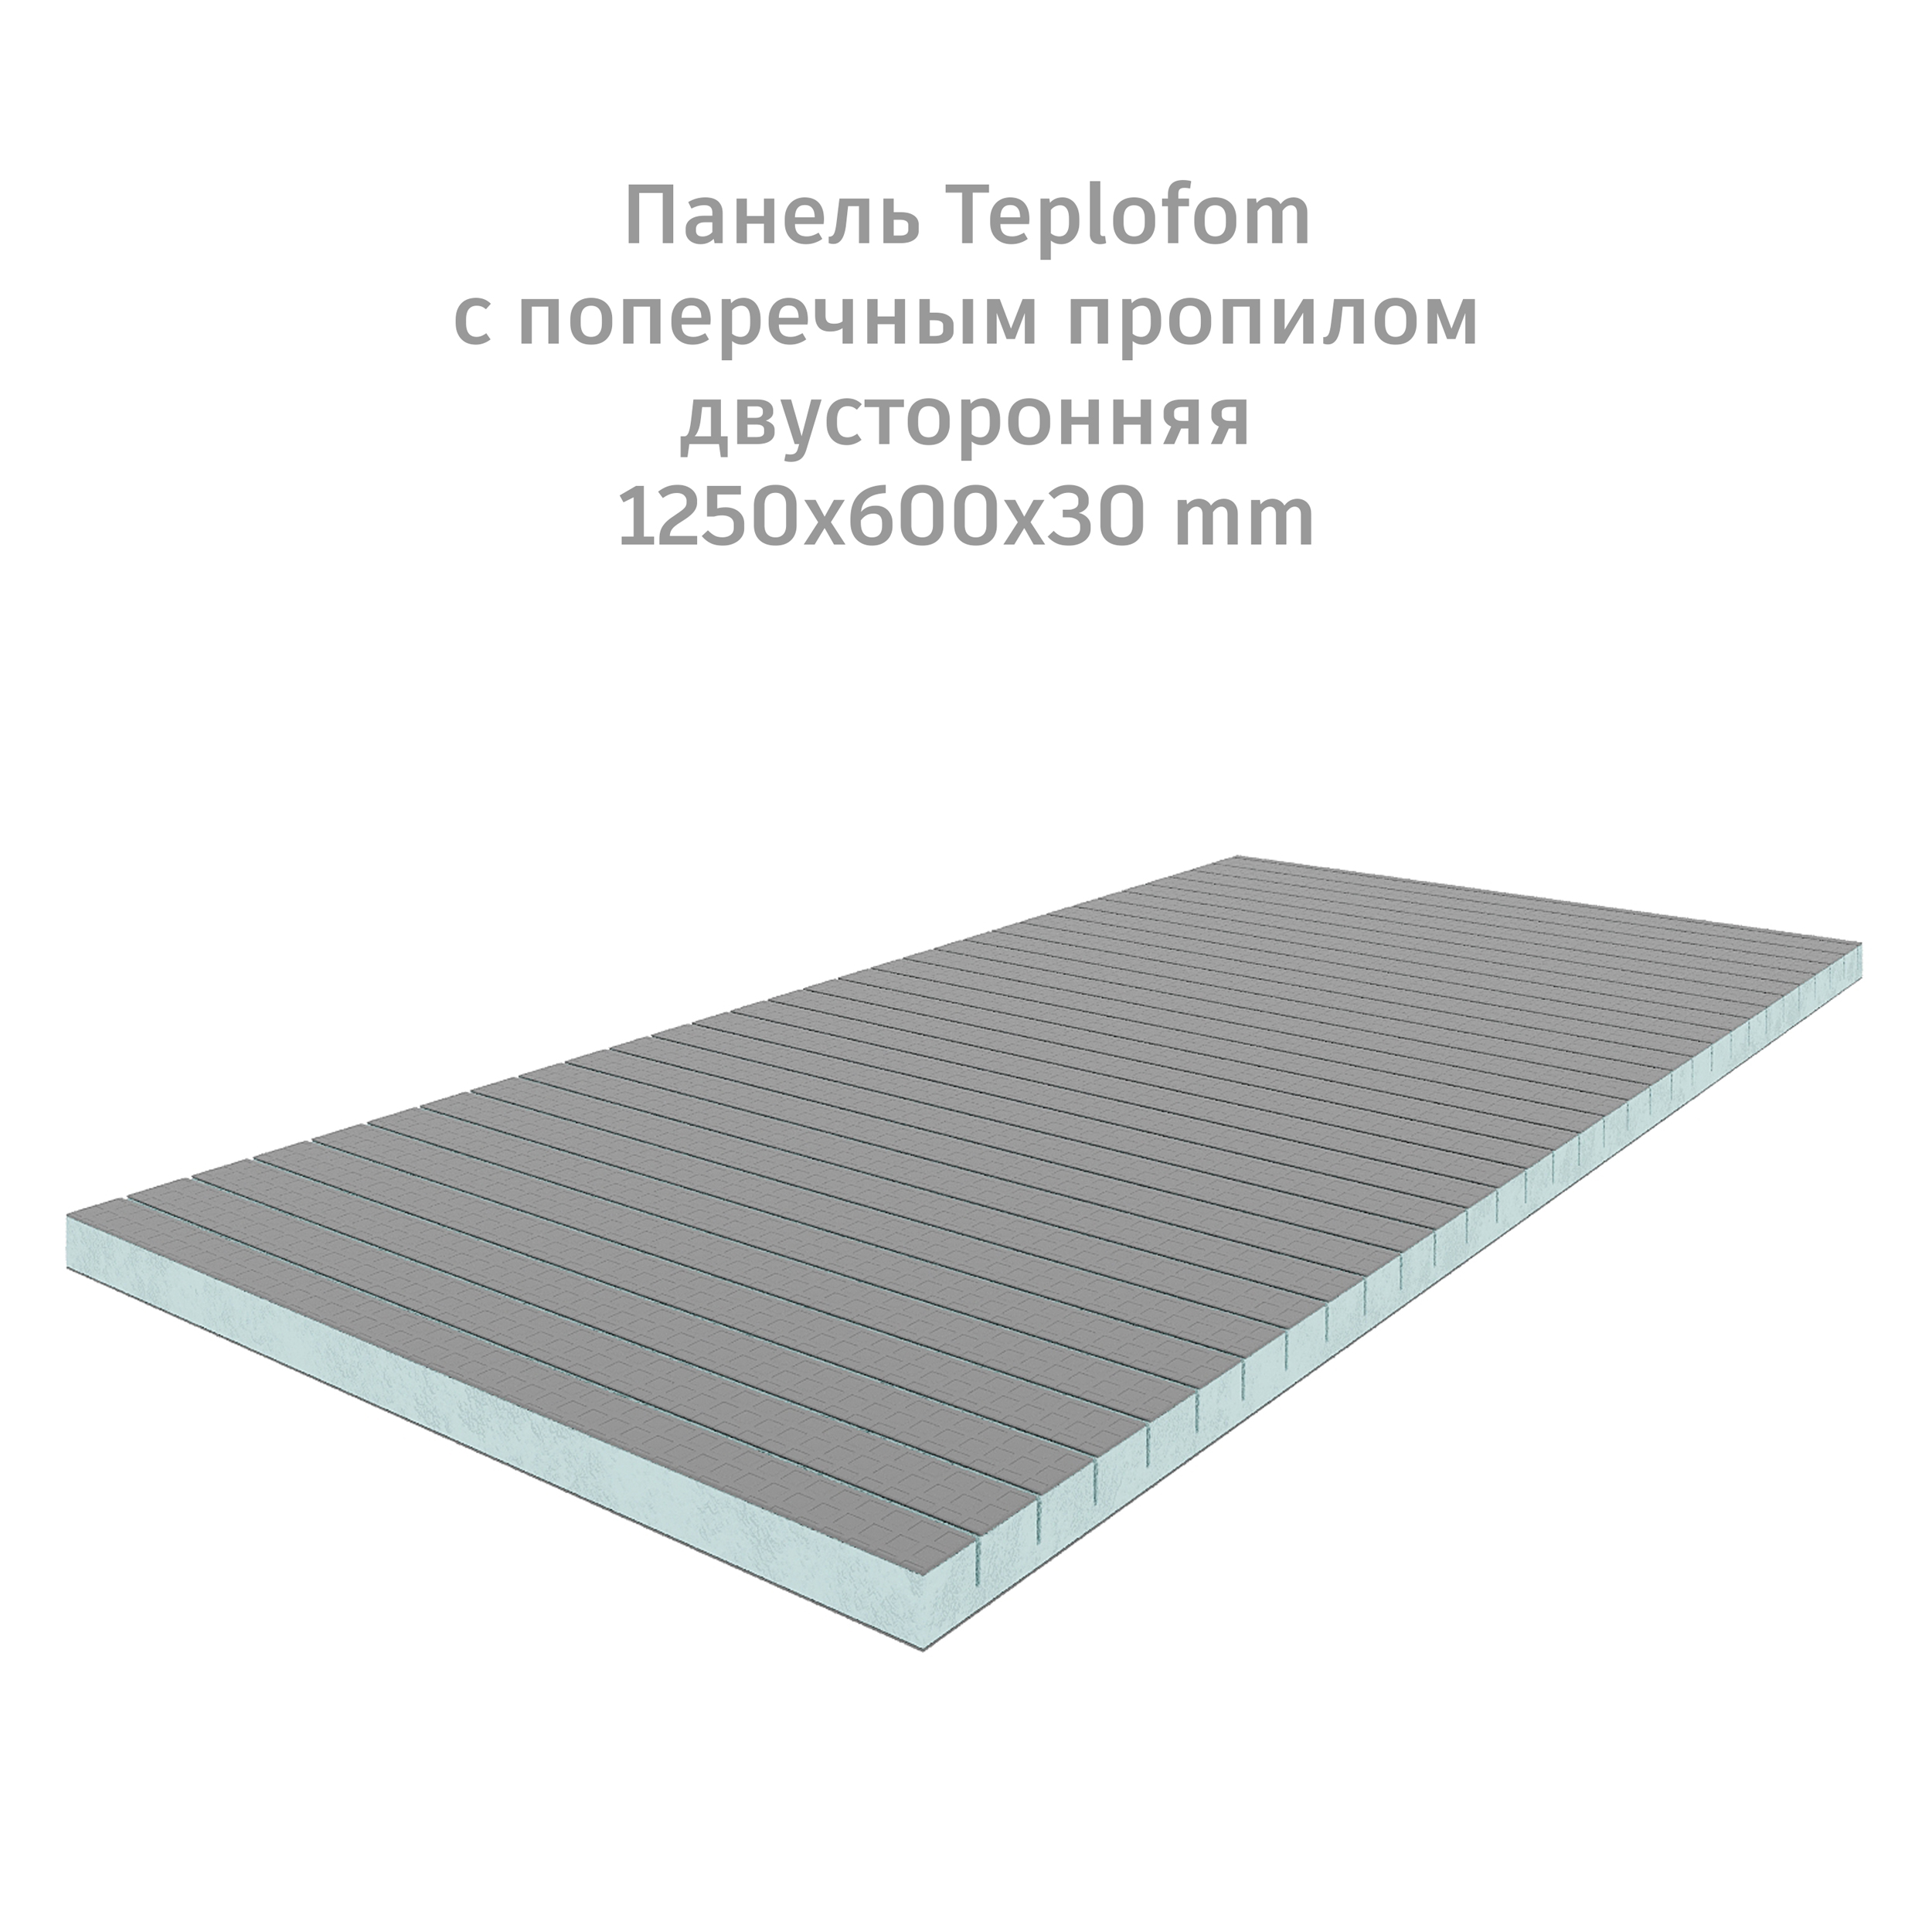 фото Теплоизоляционная панель teplofom+30 xps-02 (двухсторонний слой) 1250x600x30мм поперечный